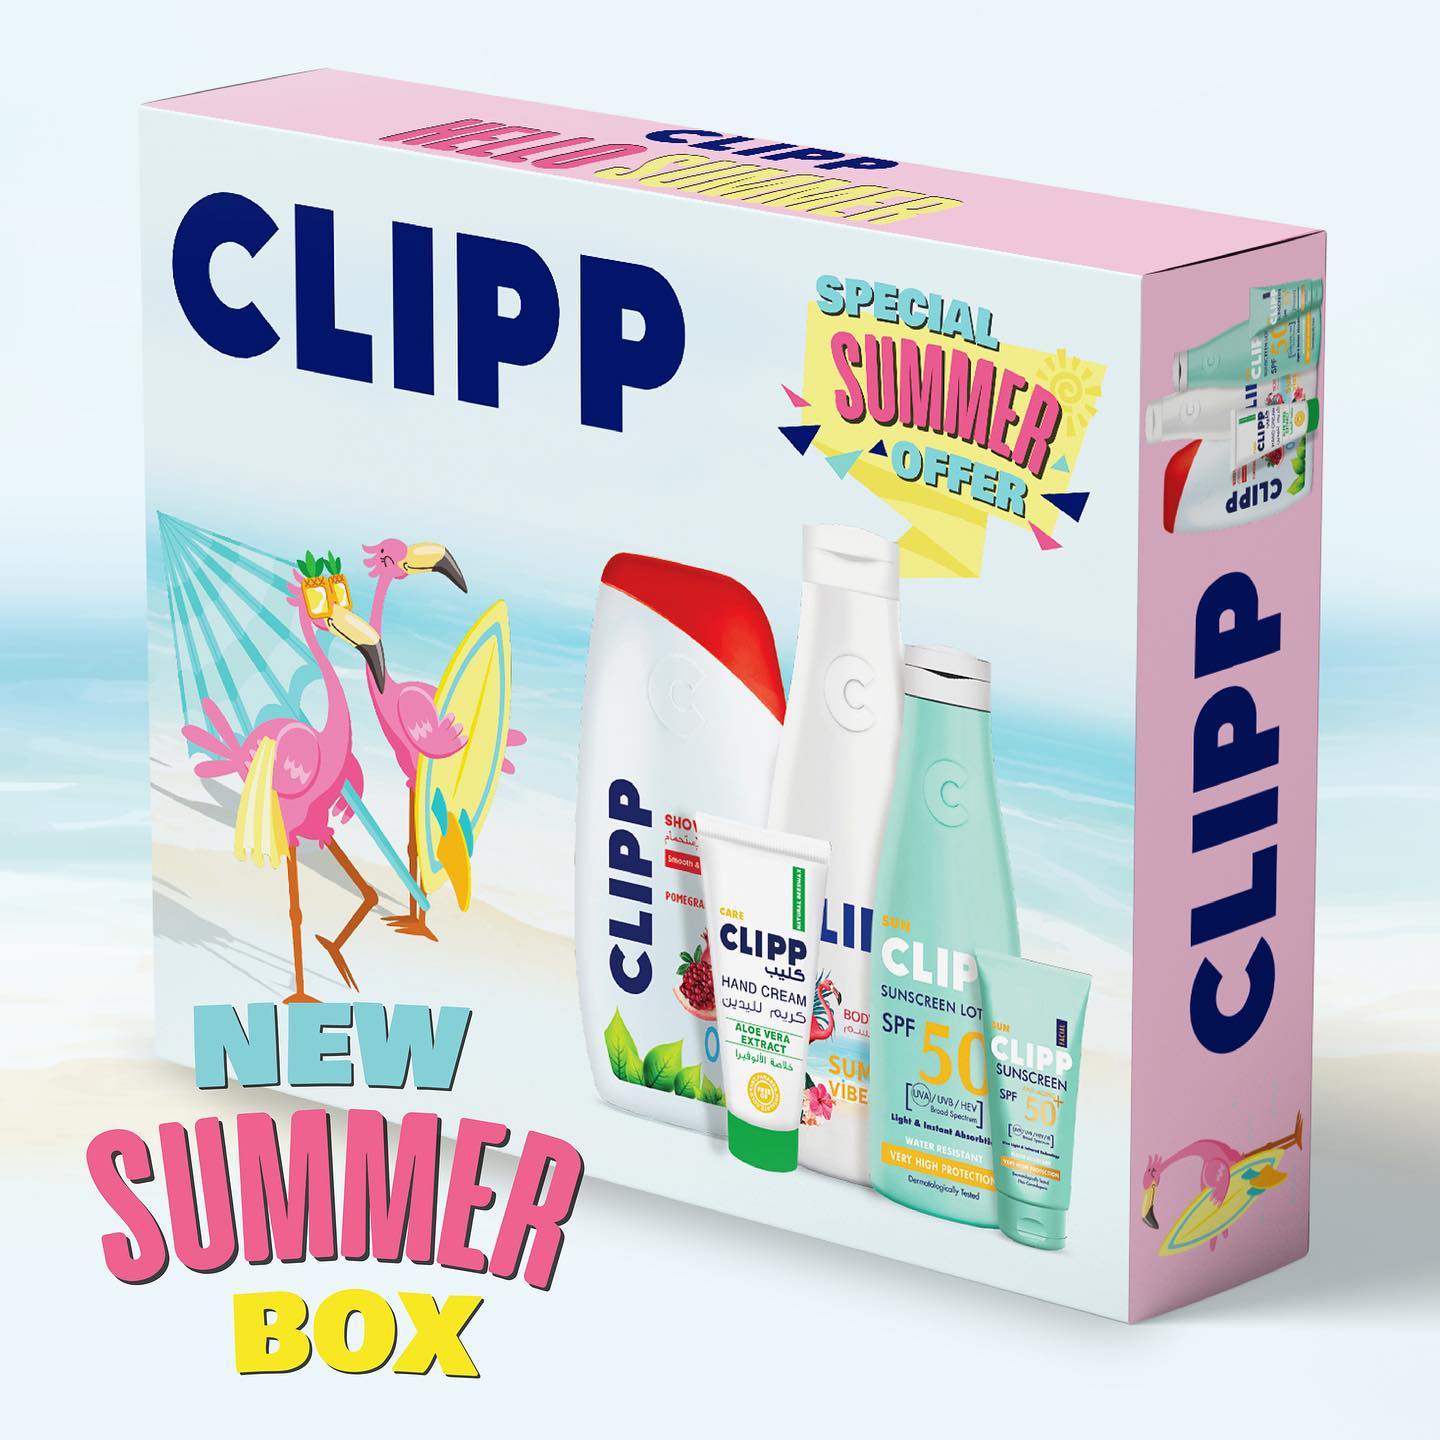 CLIPP HELLO SUMMER BOX OFFER